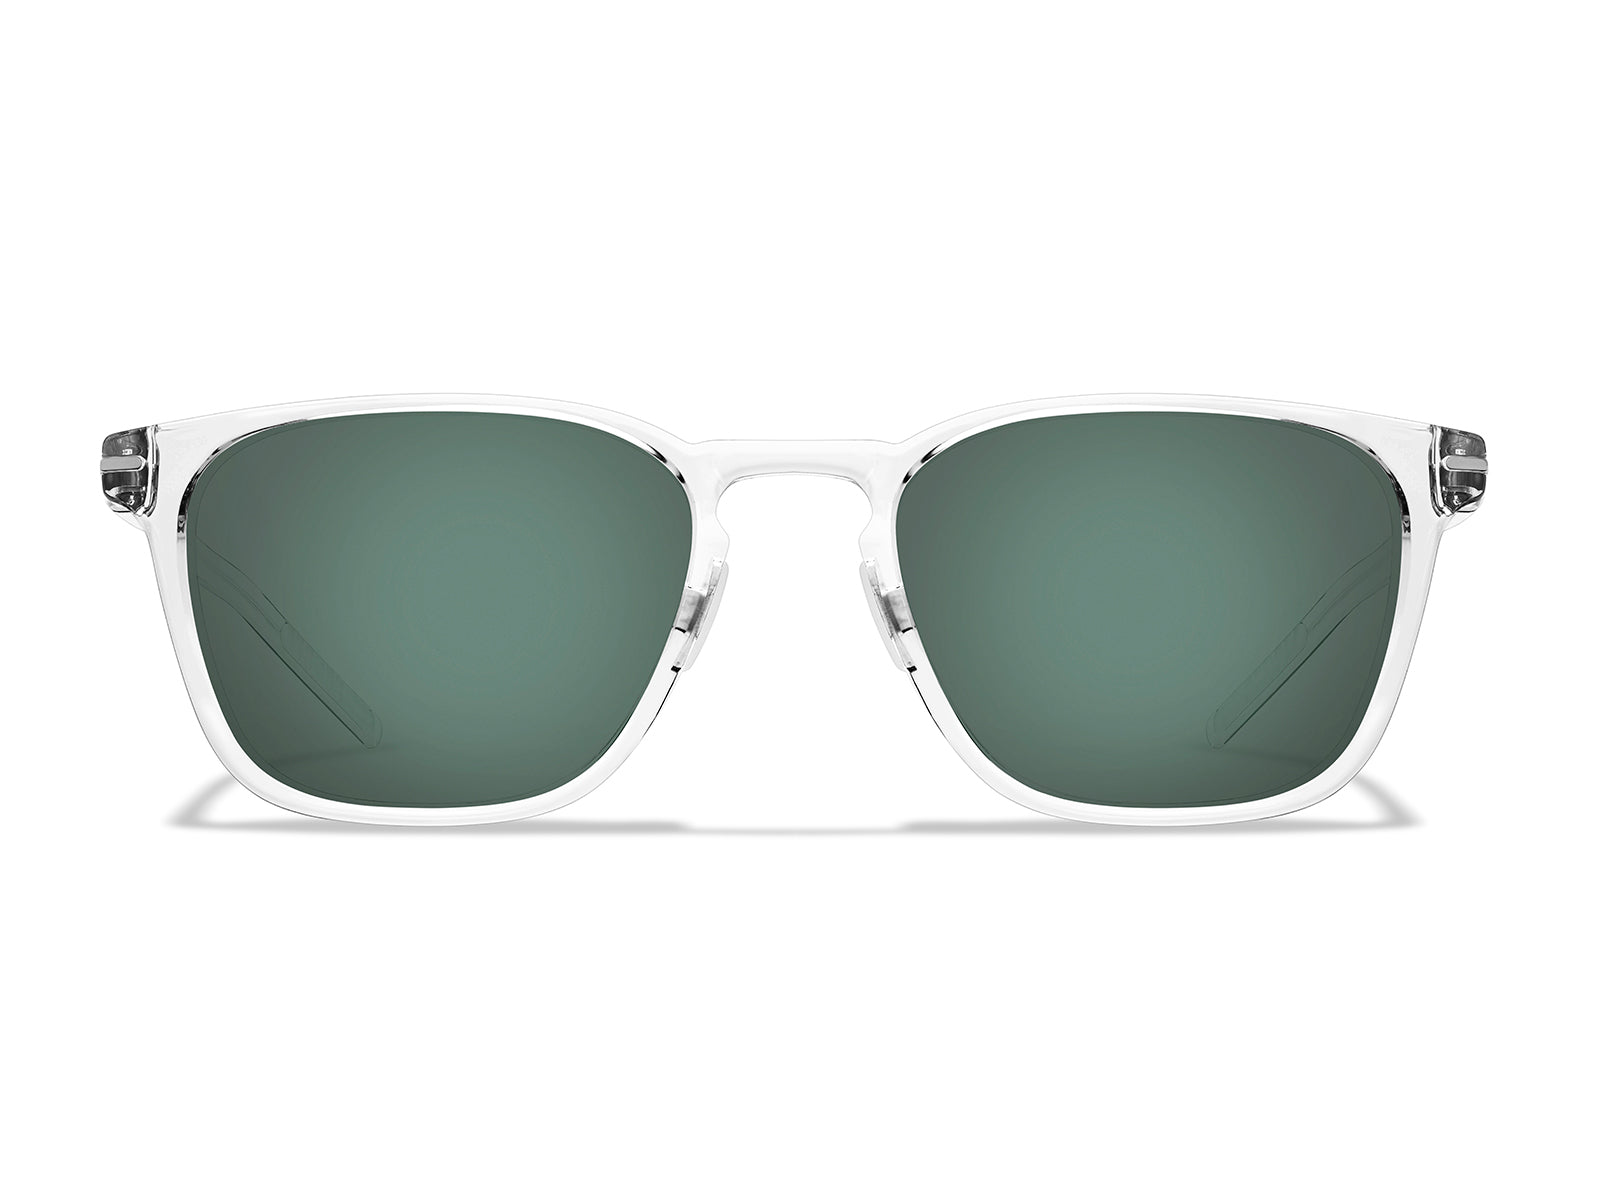 Golf - Aviator Matt Blue Tortoise Frame Prescription Sunglasses